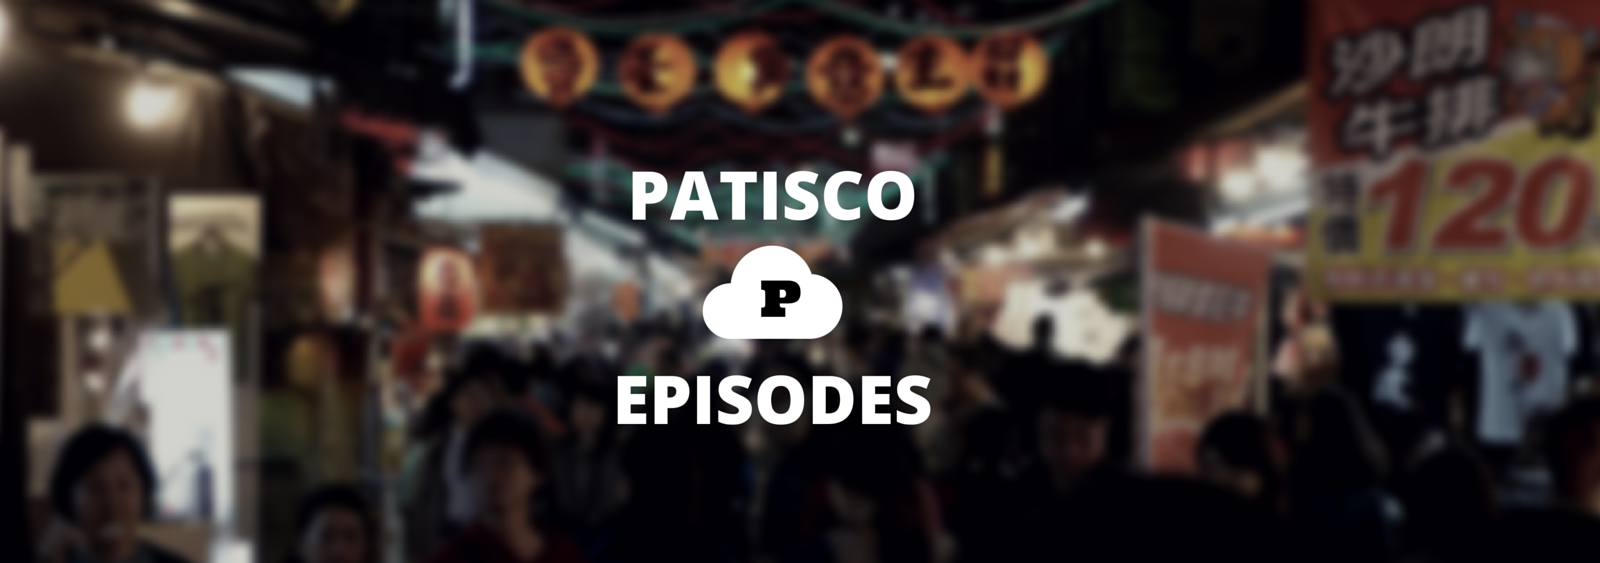 The Patisco Episodes